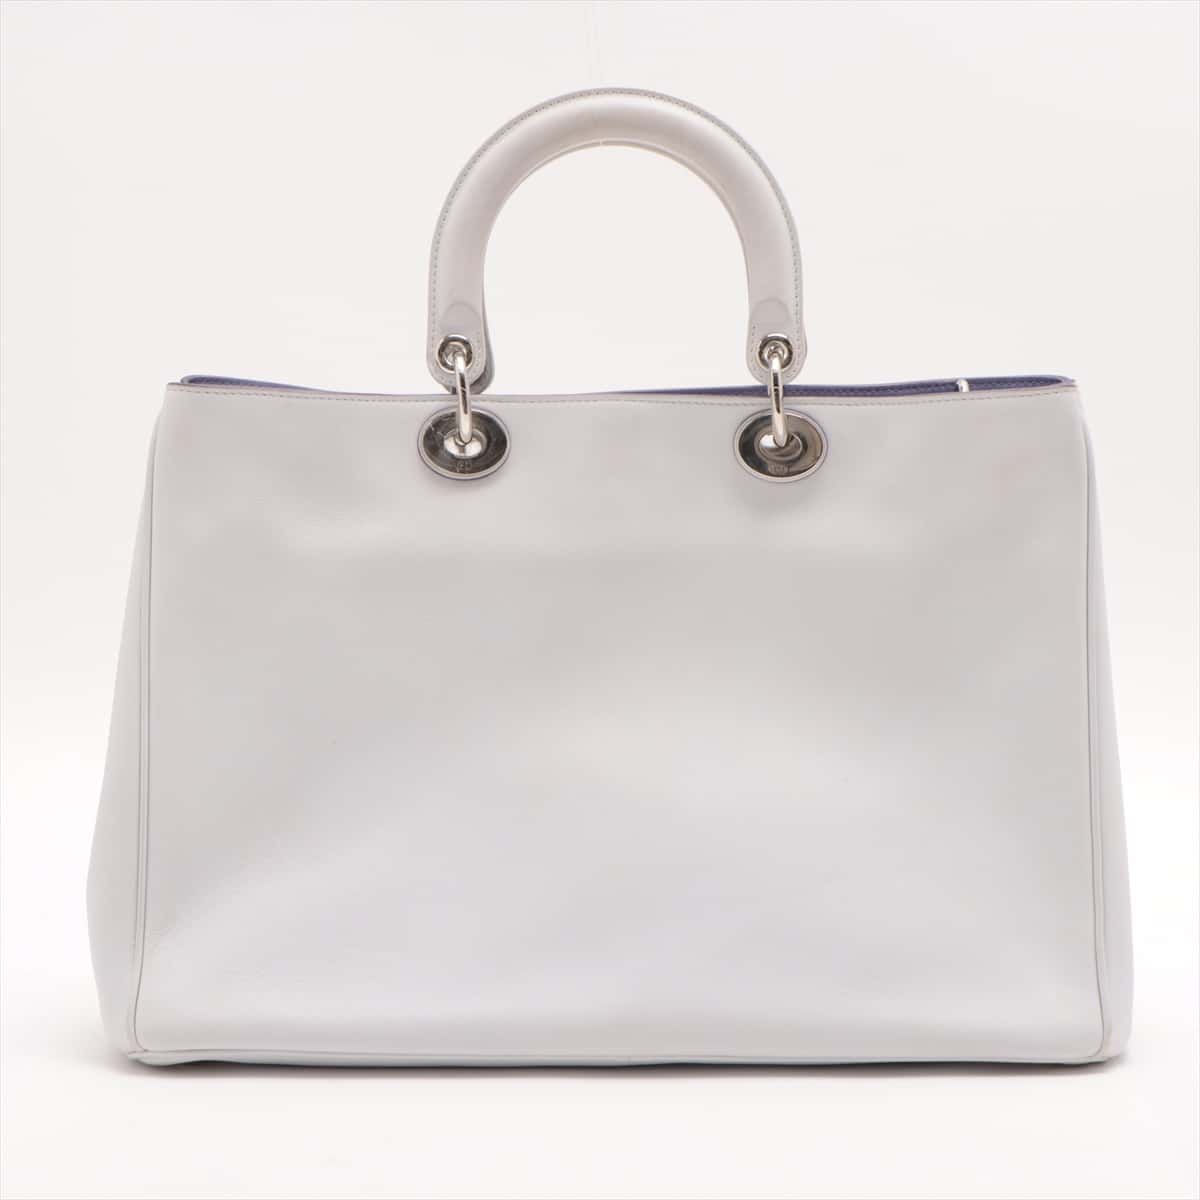 Christian Dior Diorissimo Leather 2way handbag Grey open papers